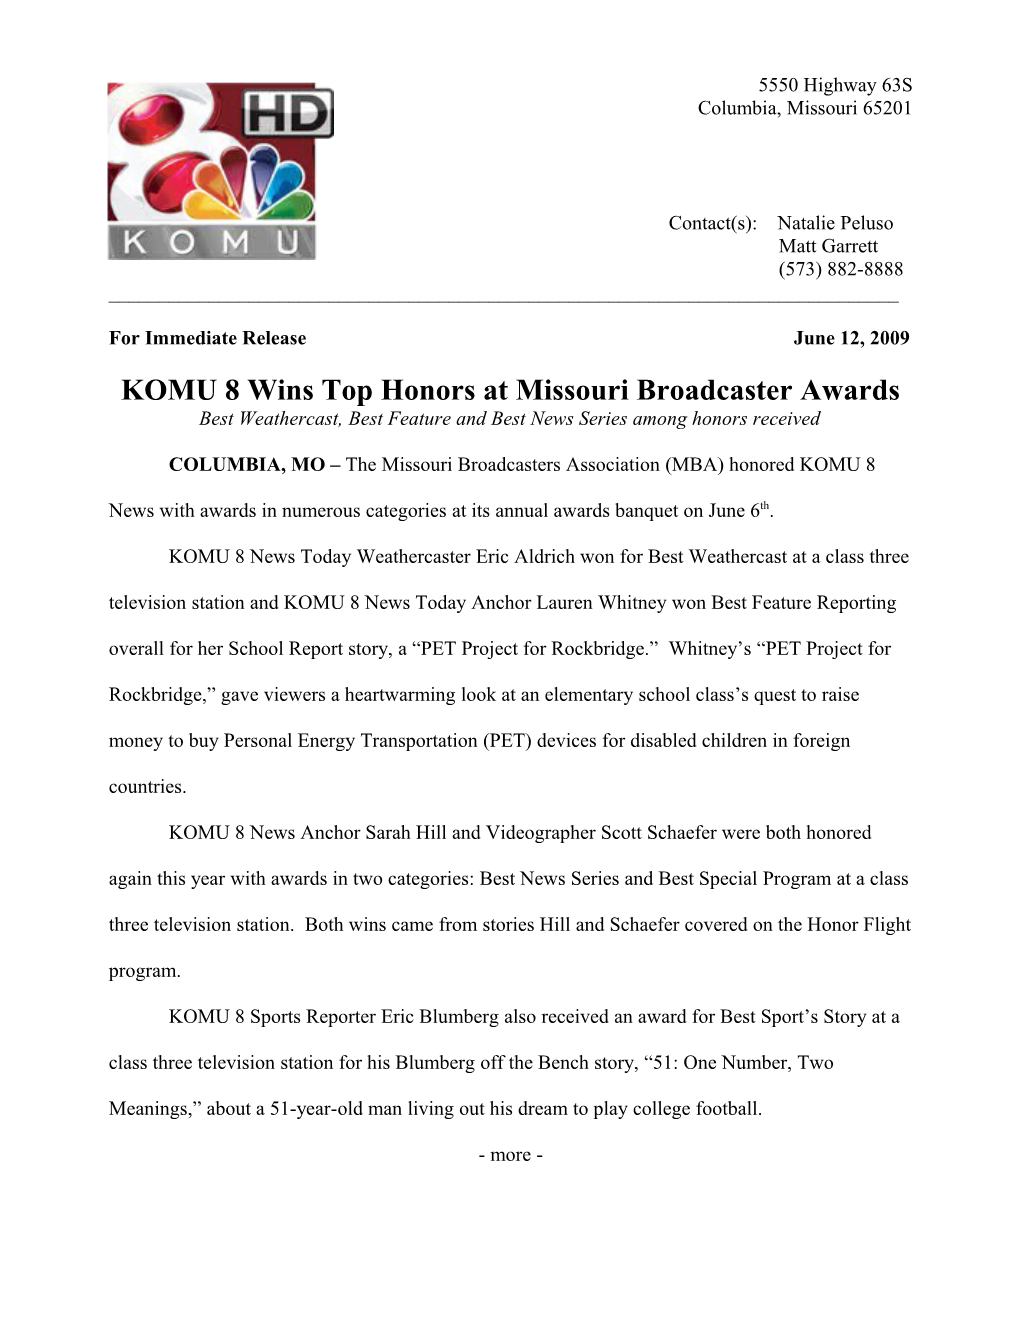 KOMU 8 Wins Top Honors at Missouri Broadcaster Awards